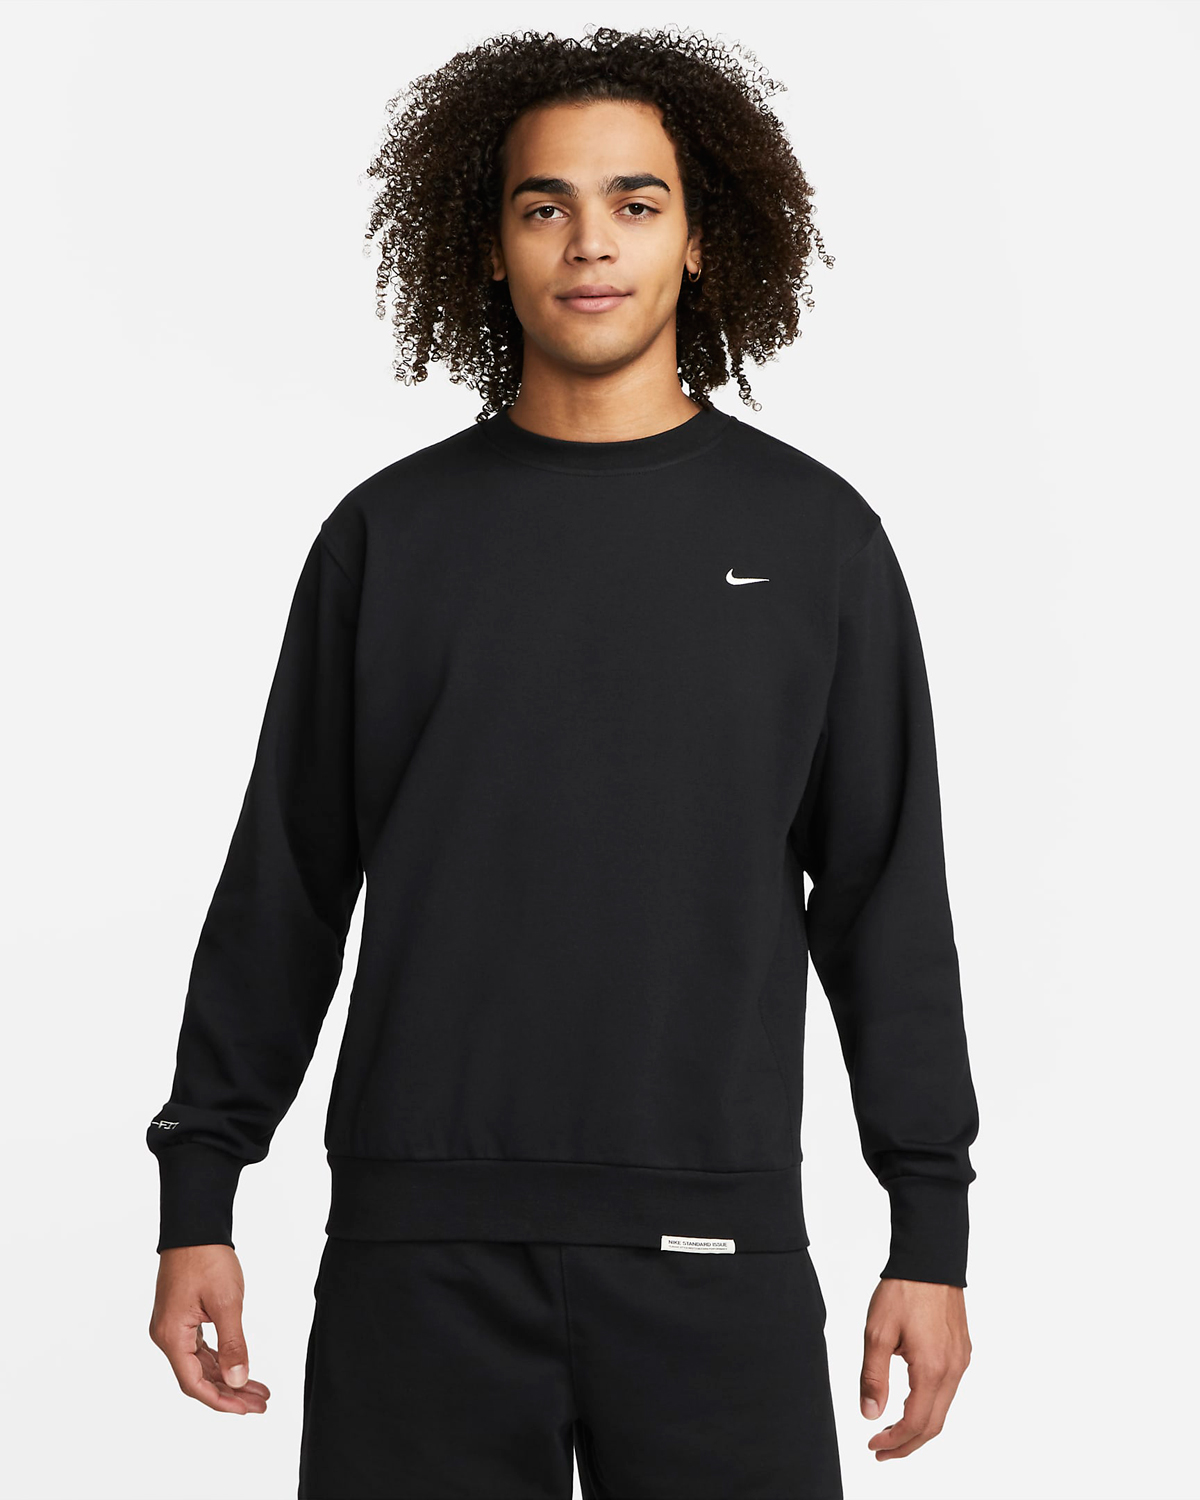 Nike-Standard-Issue-Crew-Sweatshirt-Black-White